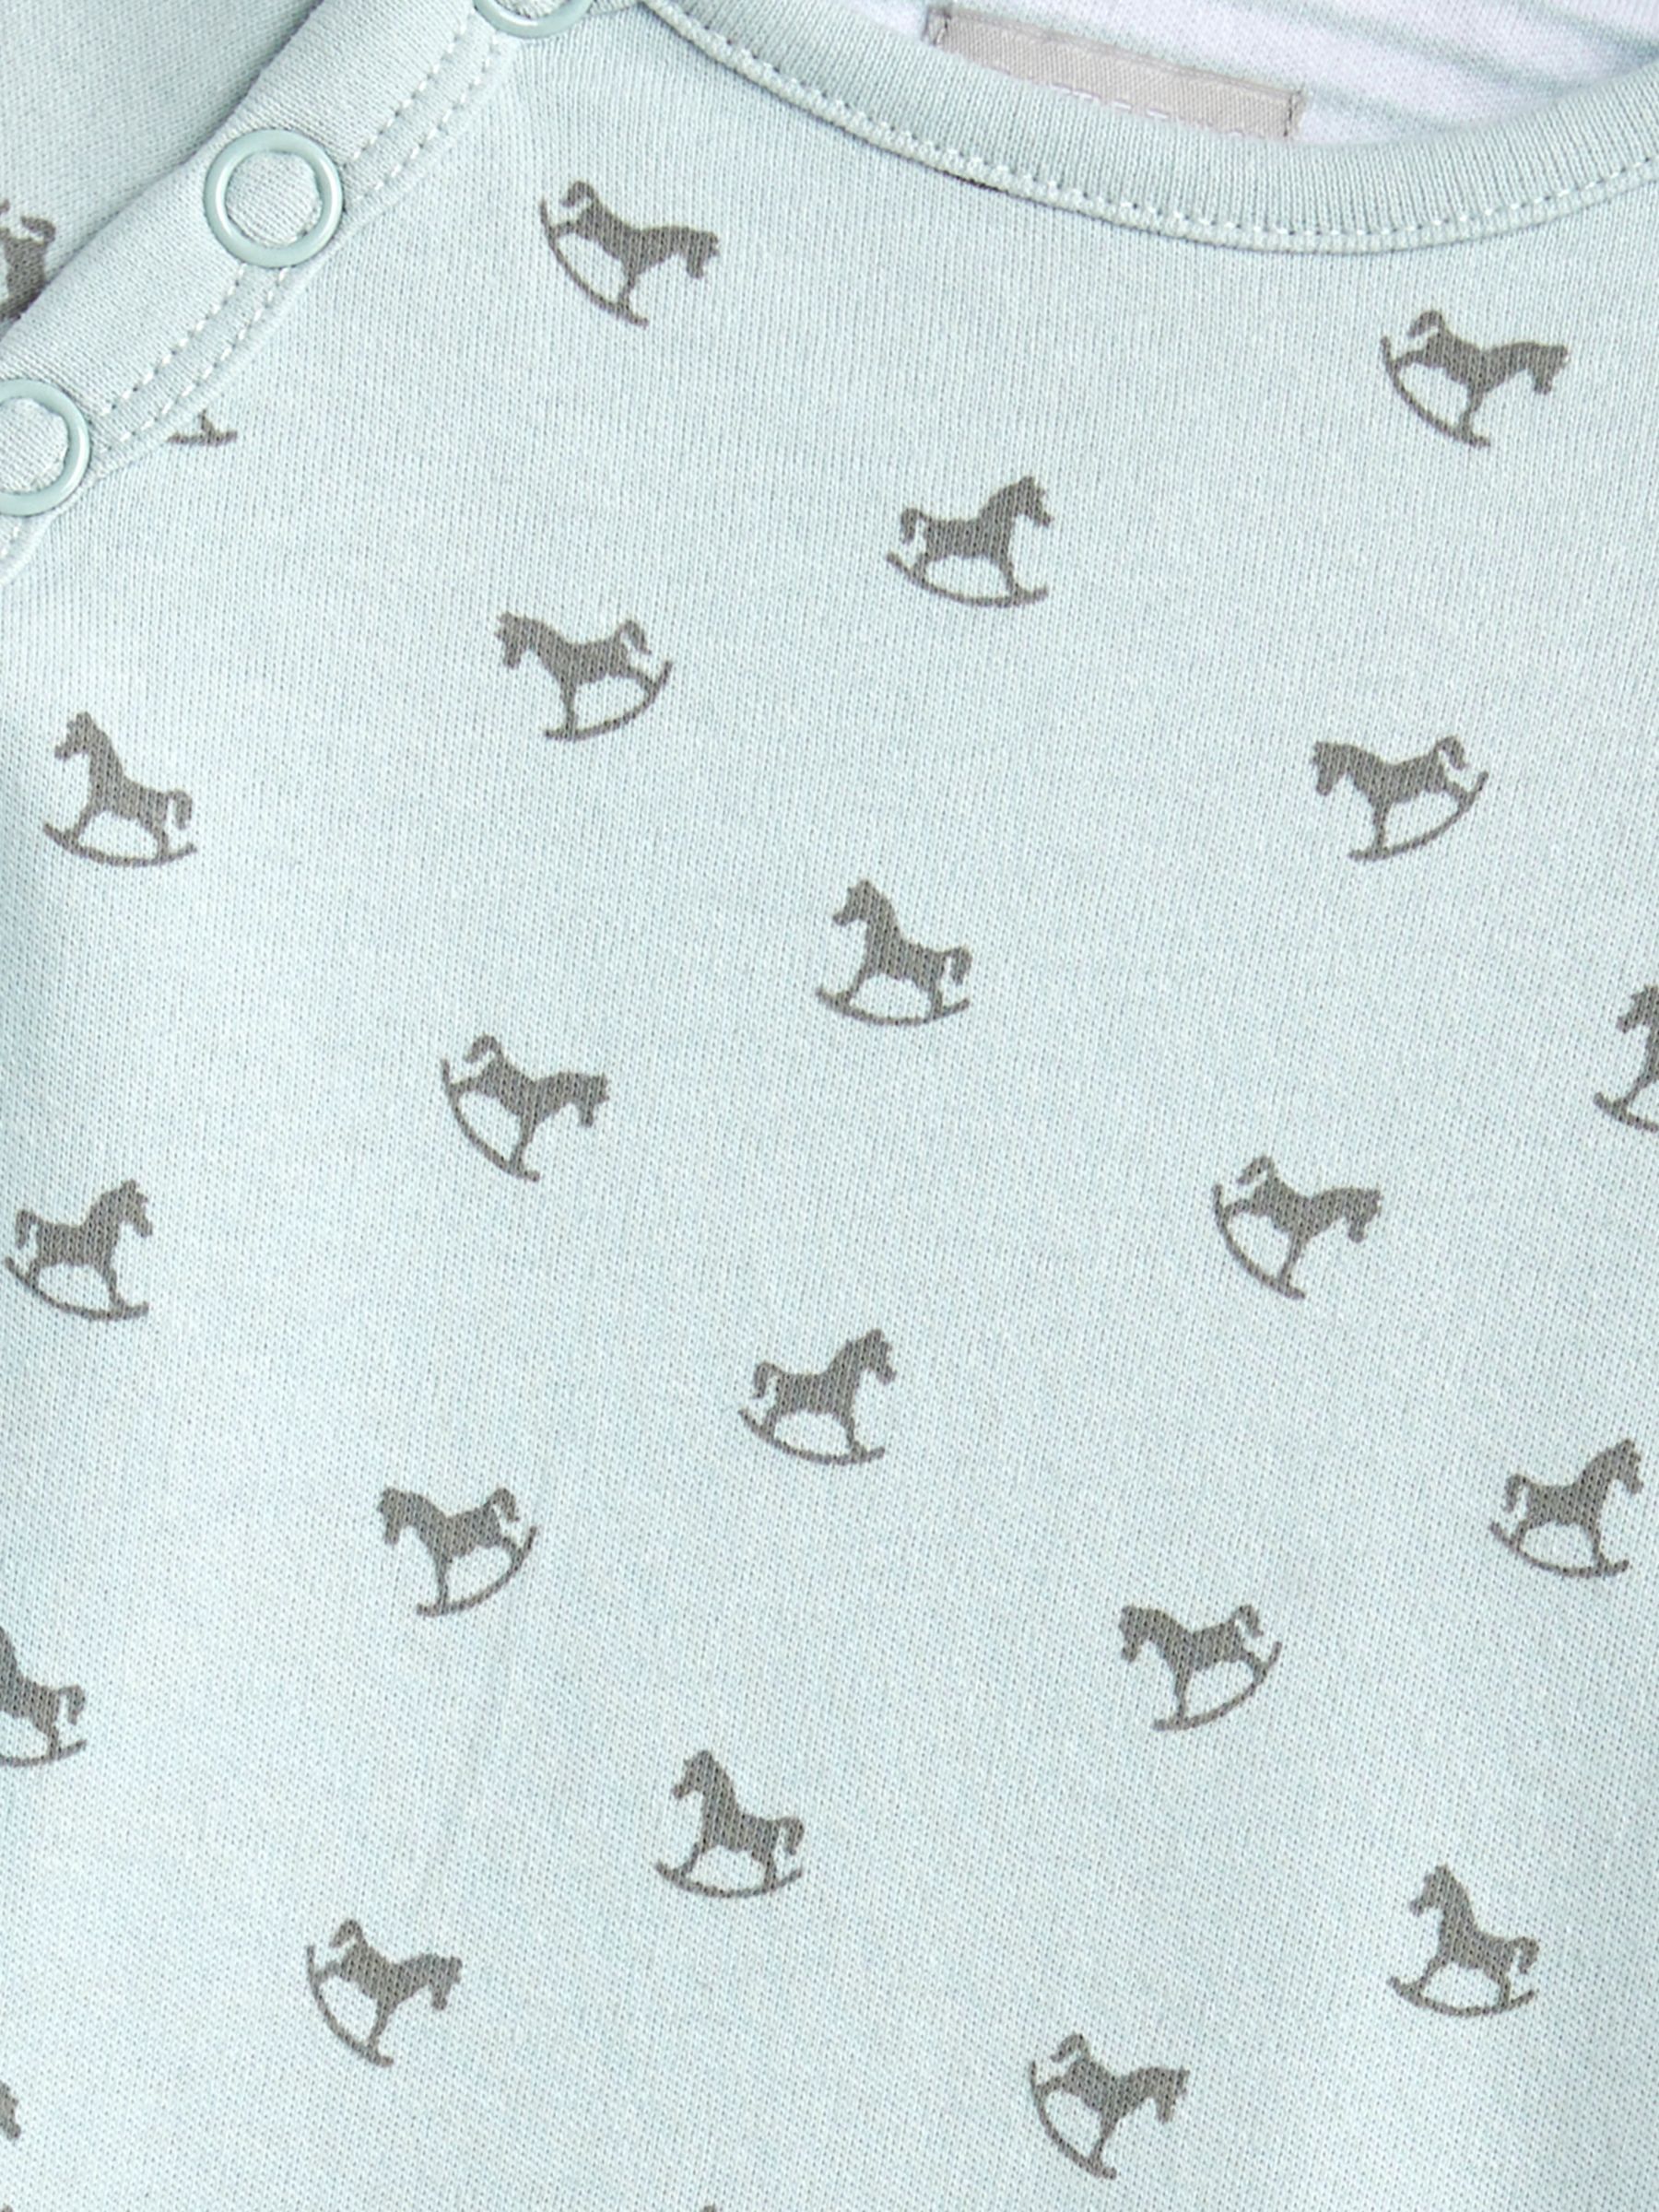 The Little Tailor Baby Cotton Rocking Horse Sleepsuit & Hat Set, Blue, 0-3 months